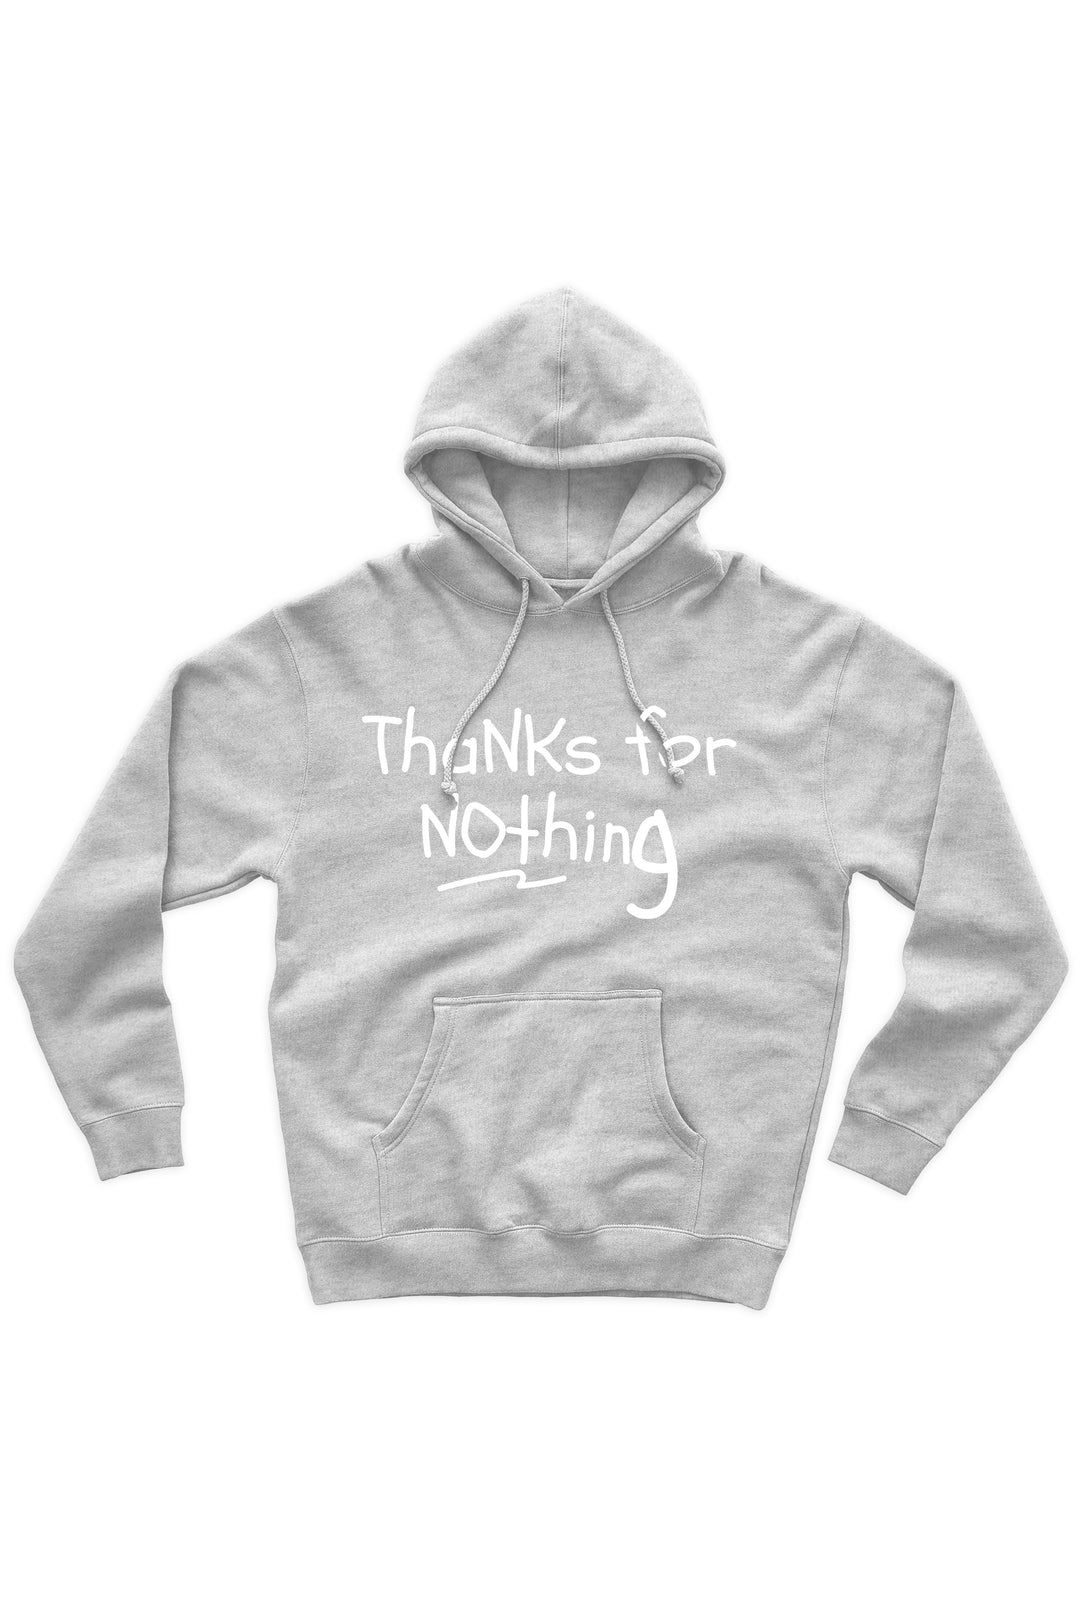 Thanks For Nothing Hoodie (White Logo) – Zamage